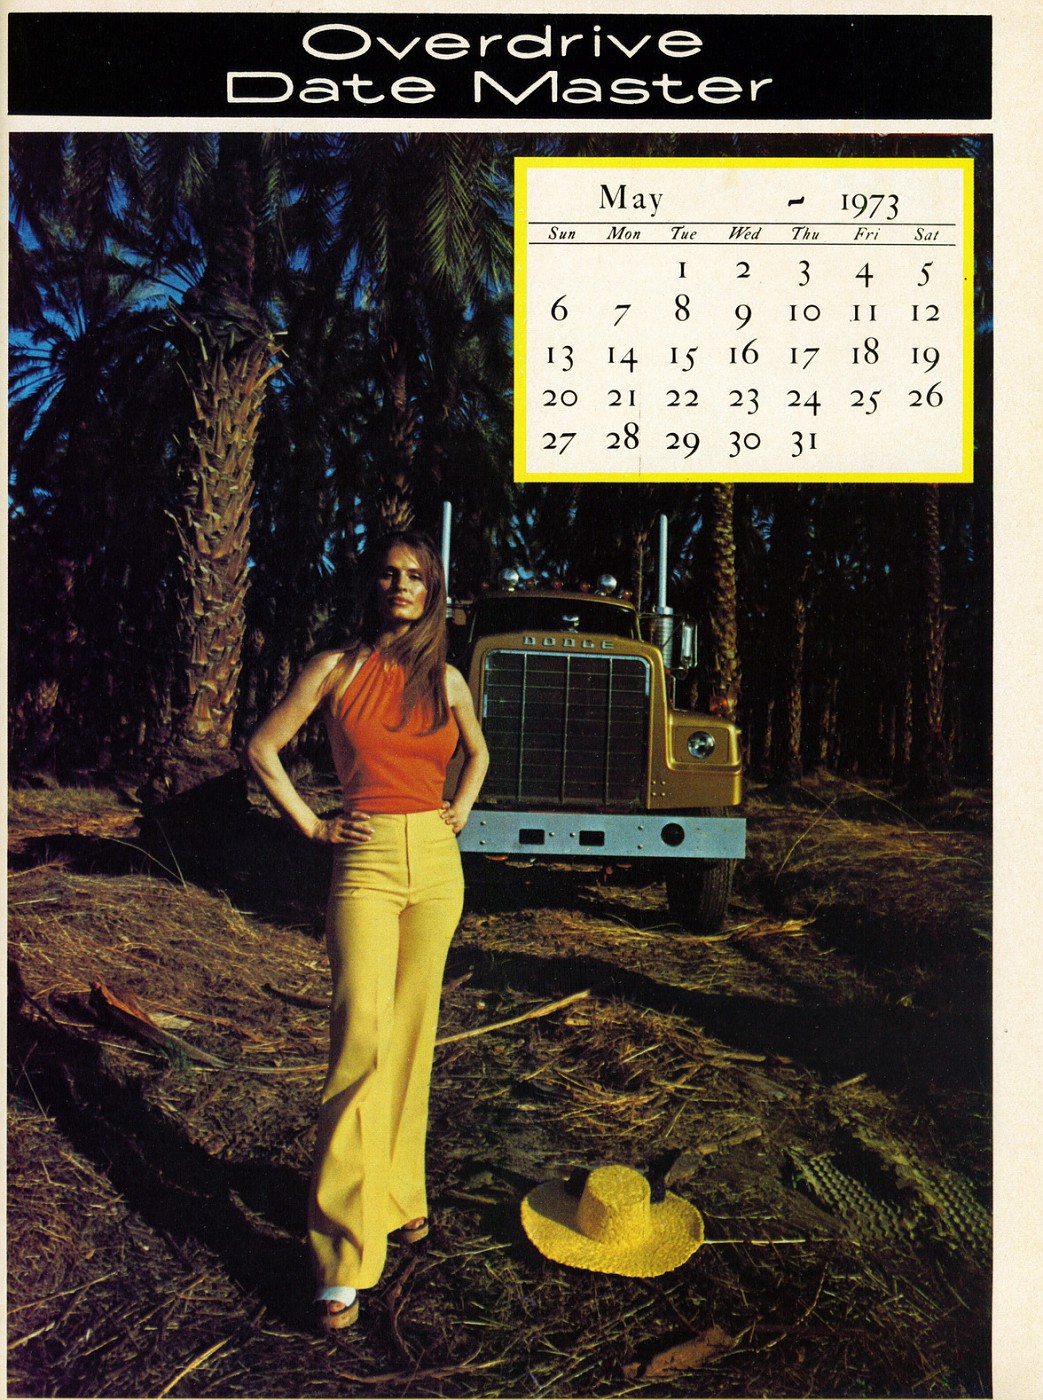 Photo: May 1973 Date Master 05 Overdrive Magazine May 1973 album